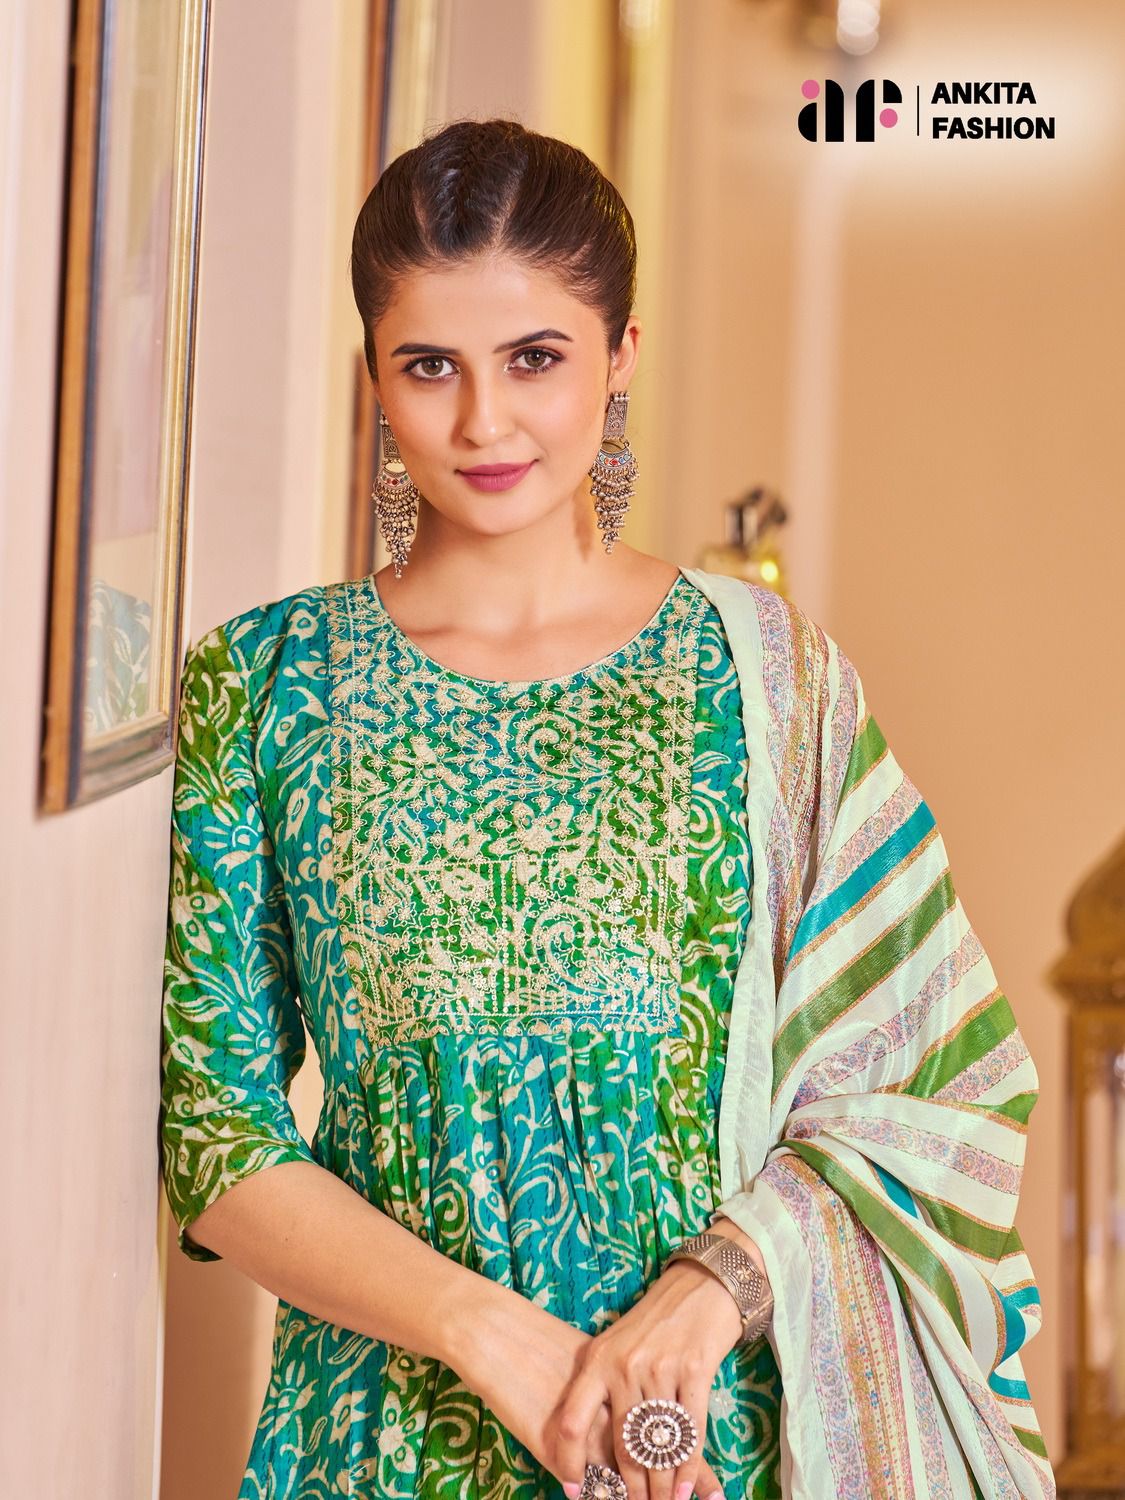 ankita fashion aneri mal cotton elegant look top bottom with dupatta catalog